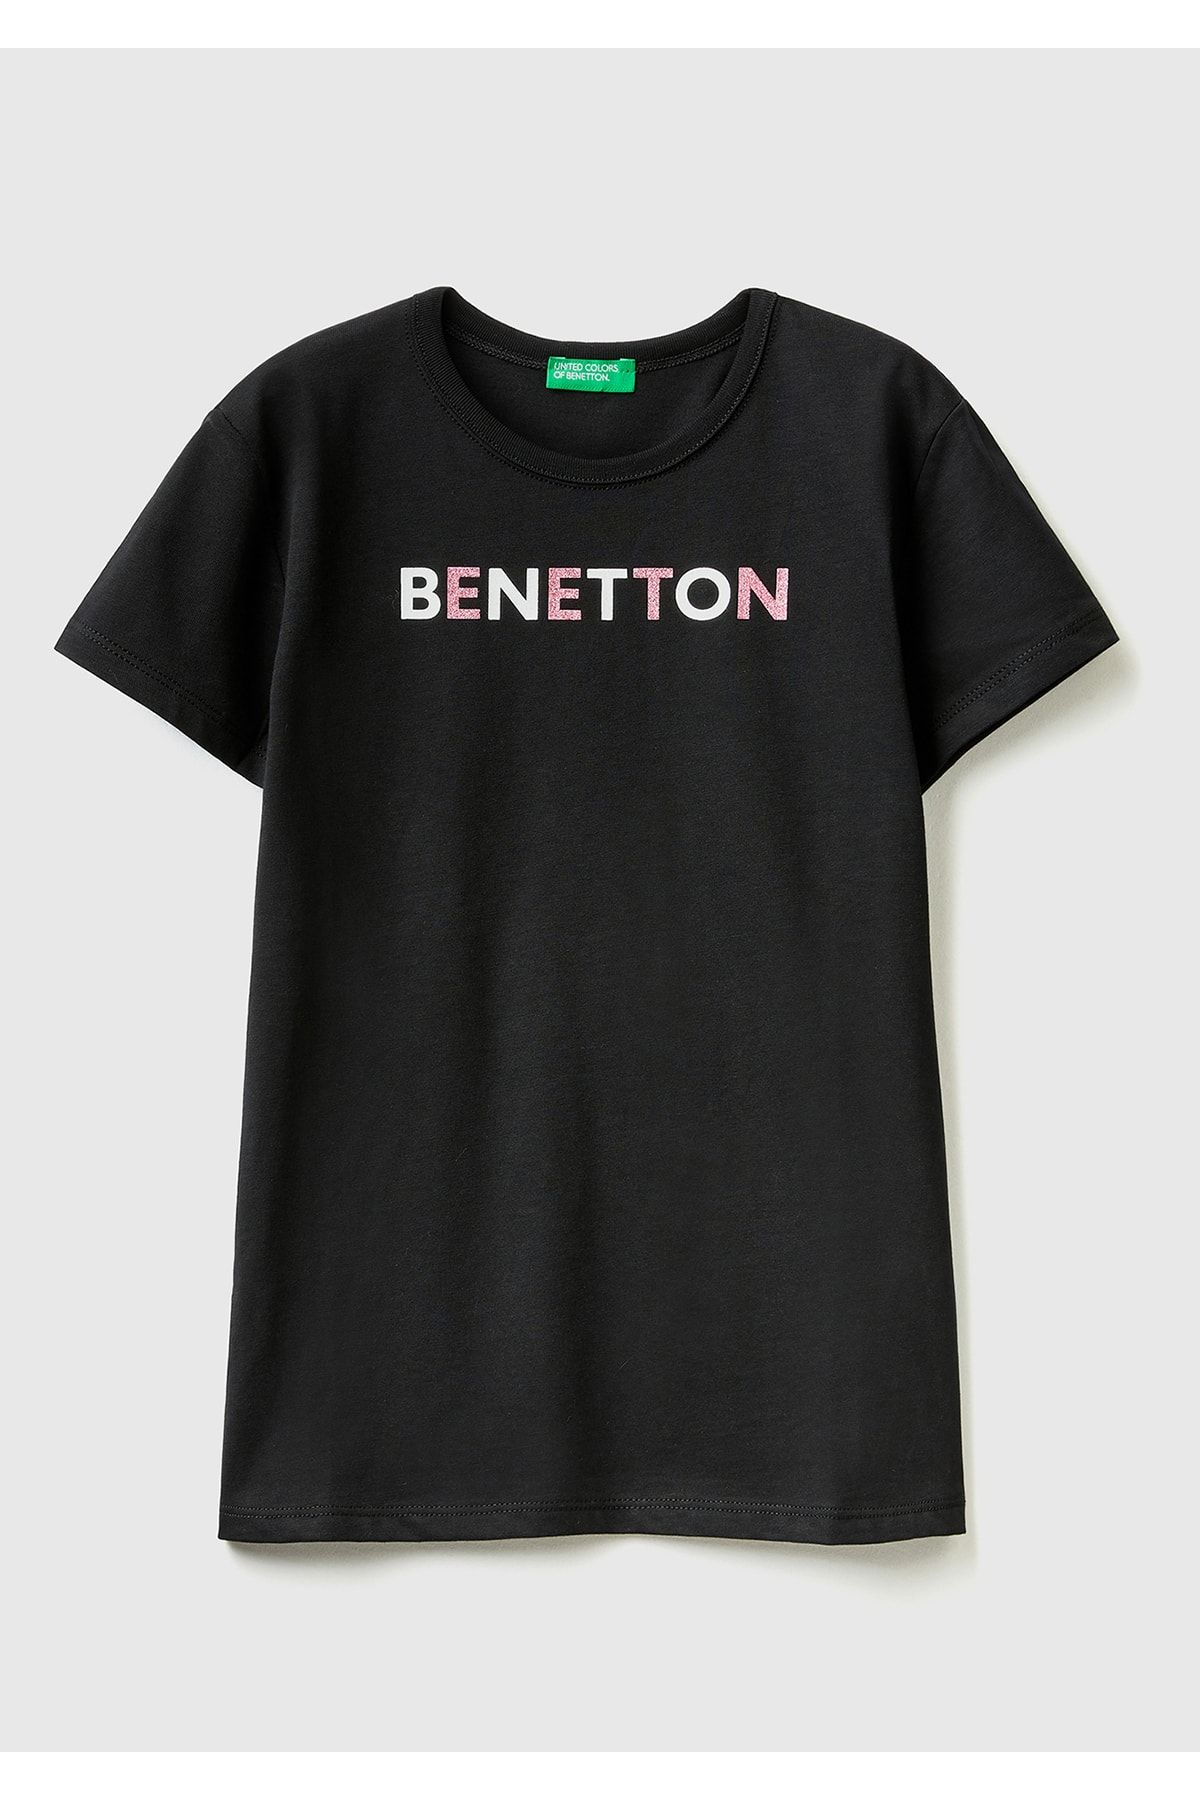 United Colors of Benetton Kız Çocuk Siyah Slogan Baskılı T-Shirt Siyah